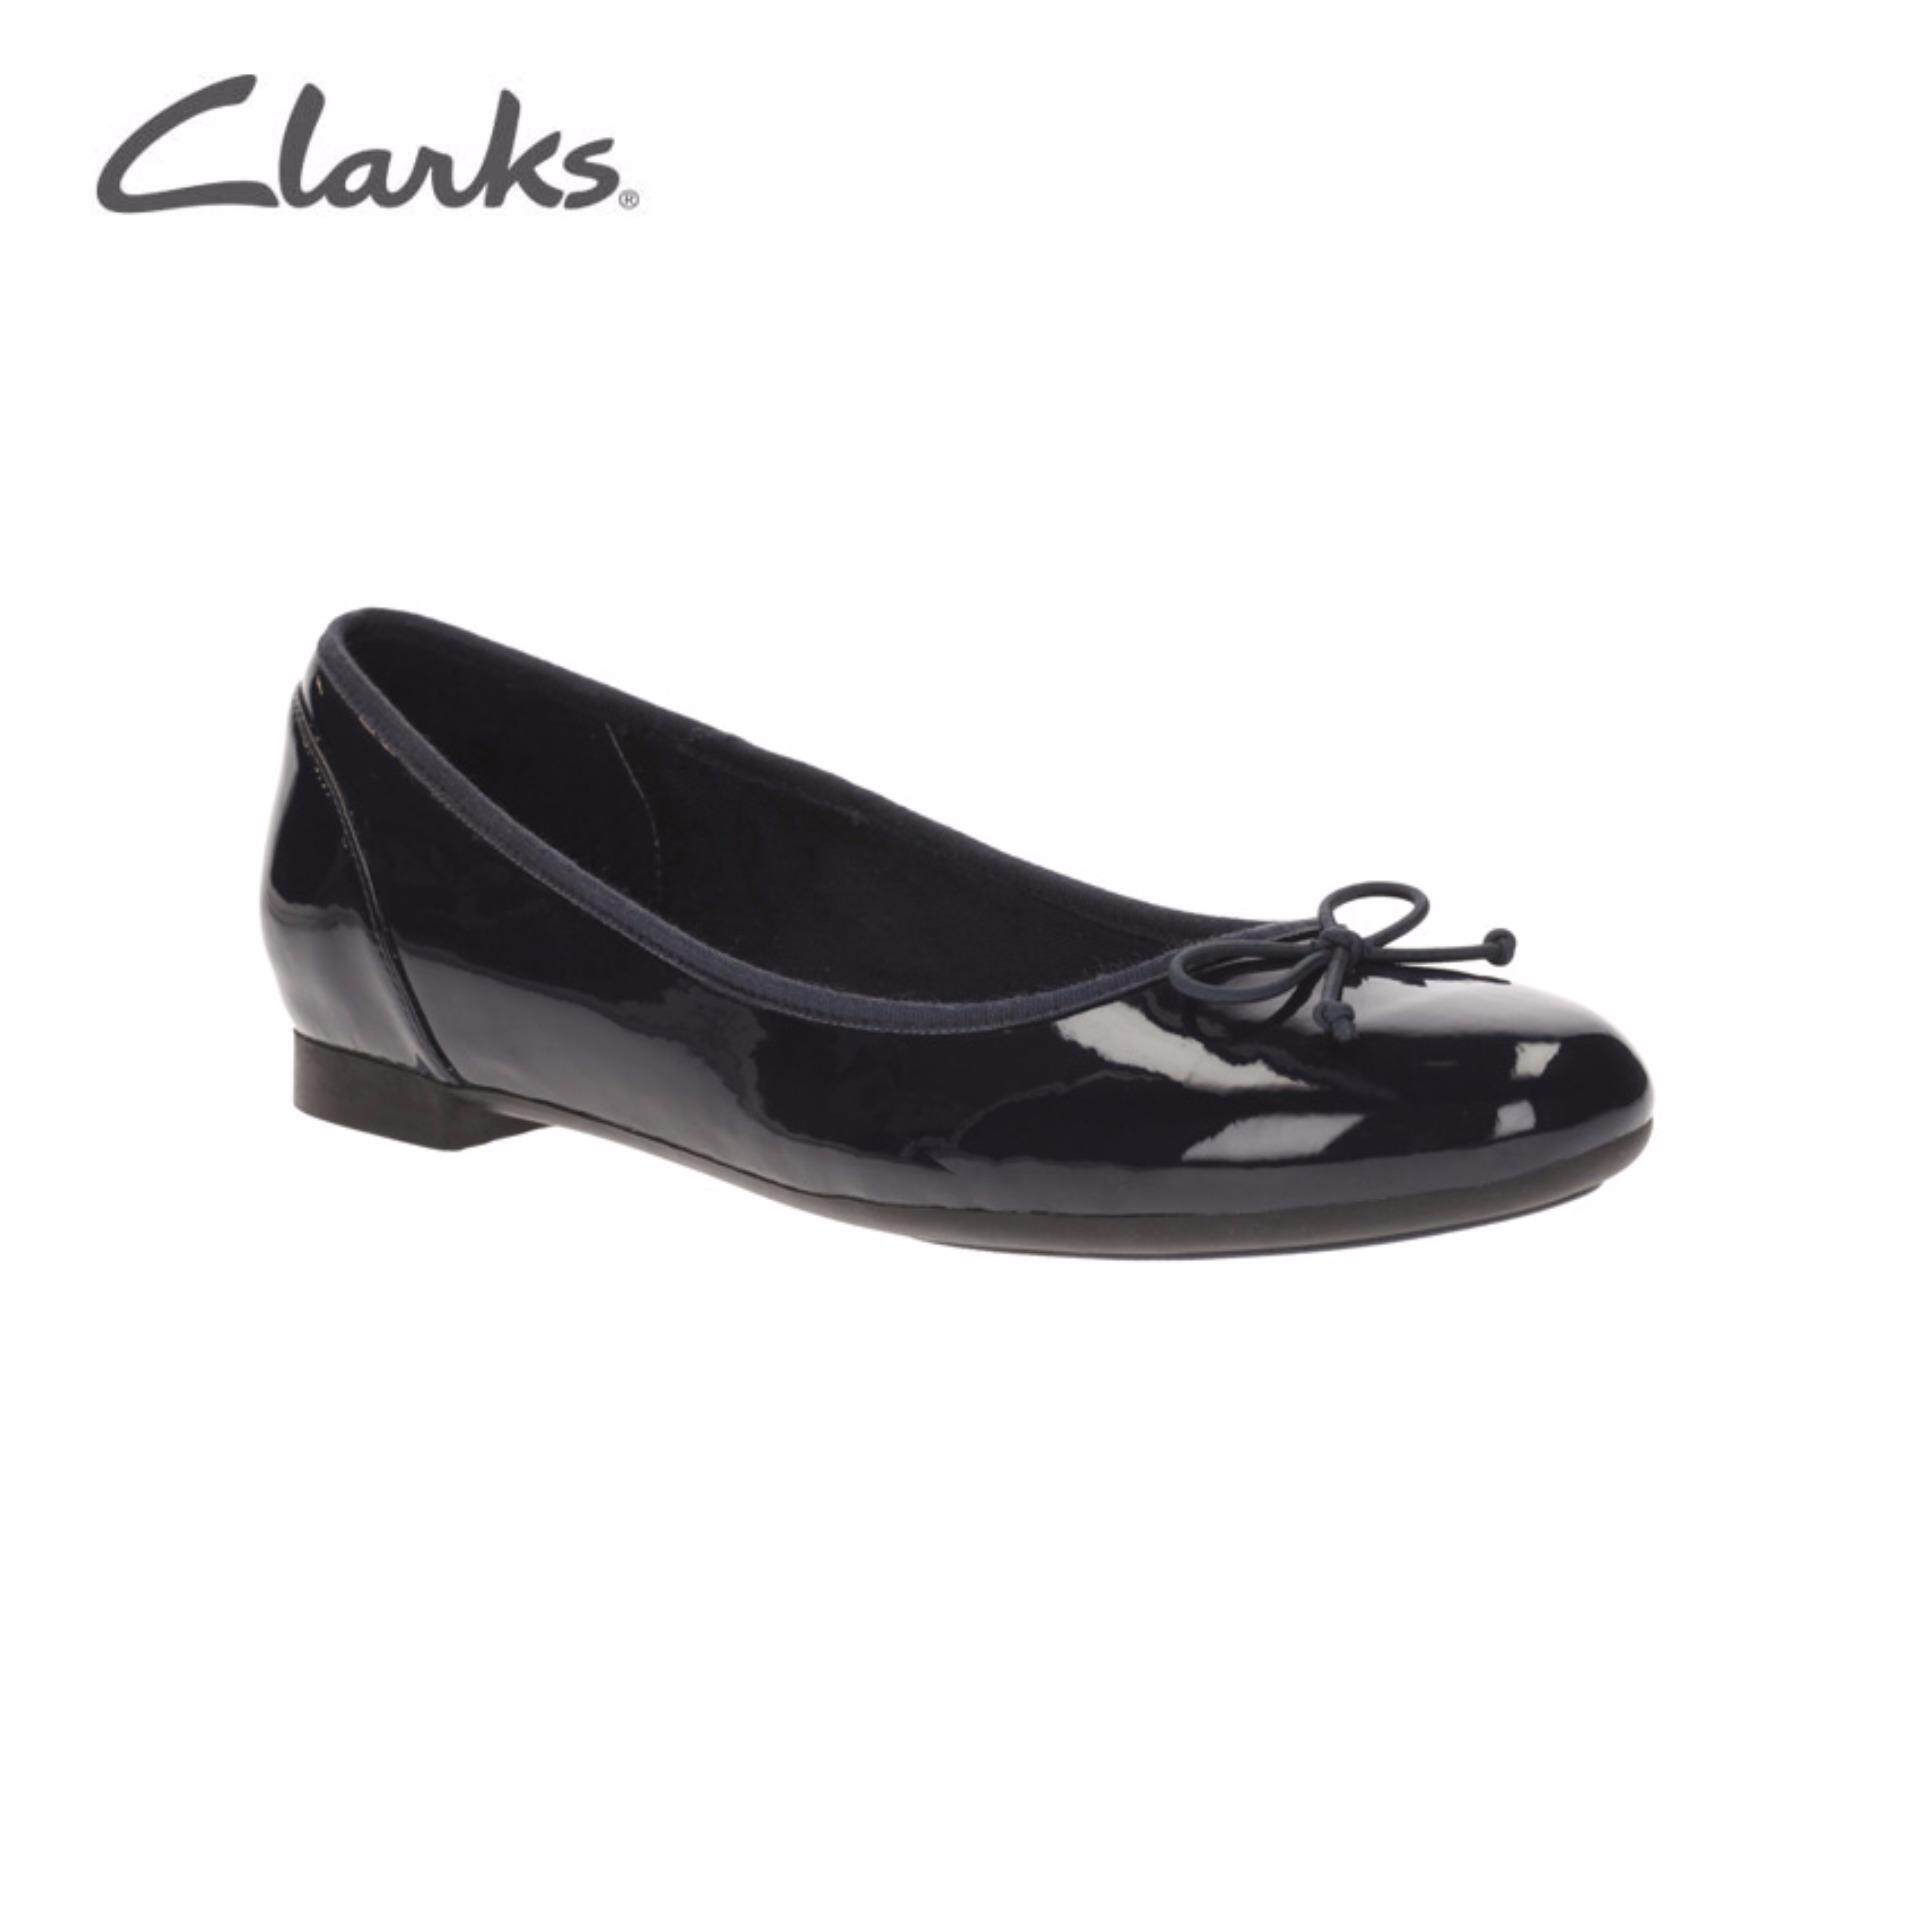 clarks ladies ballerina shoes